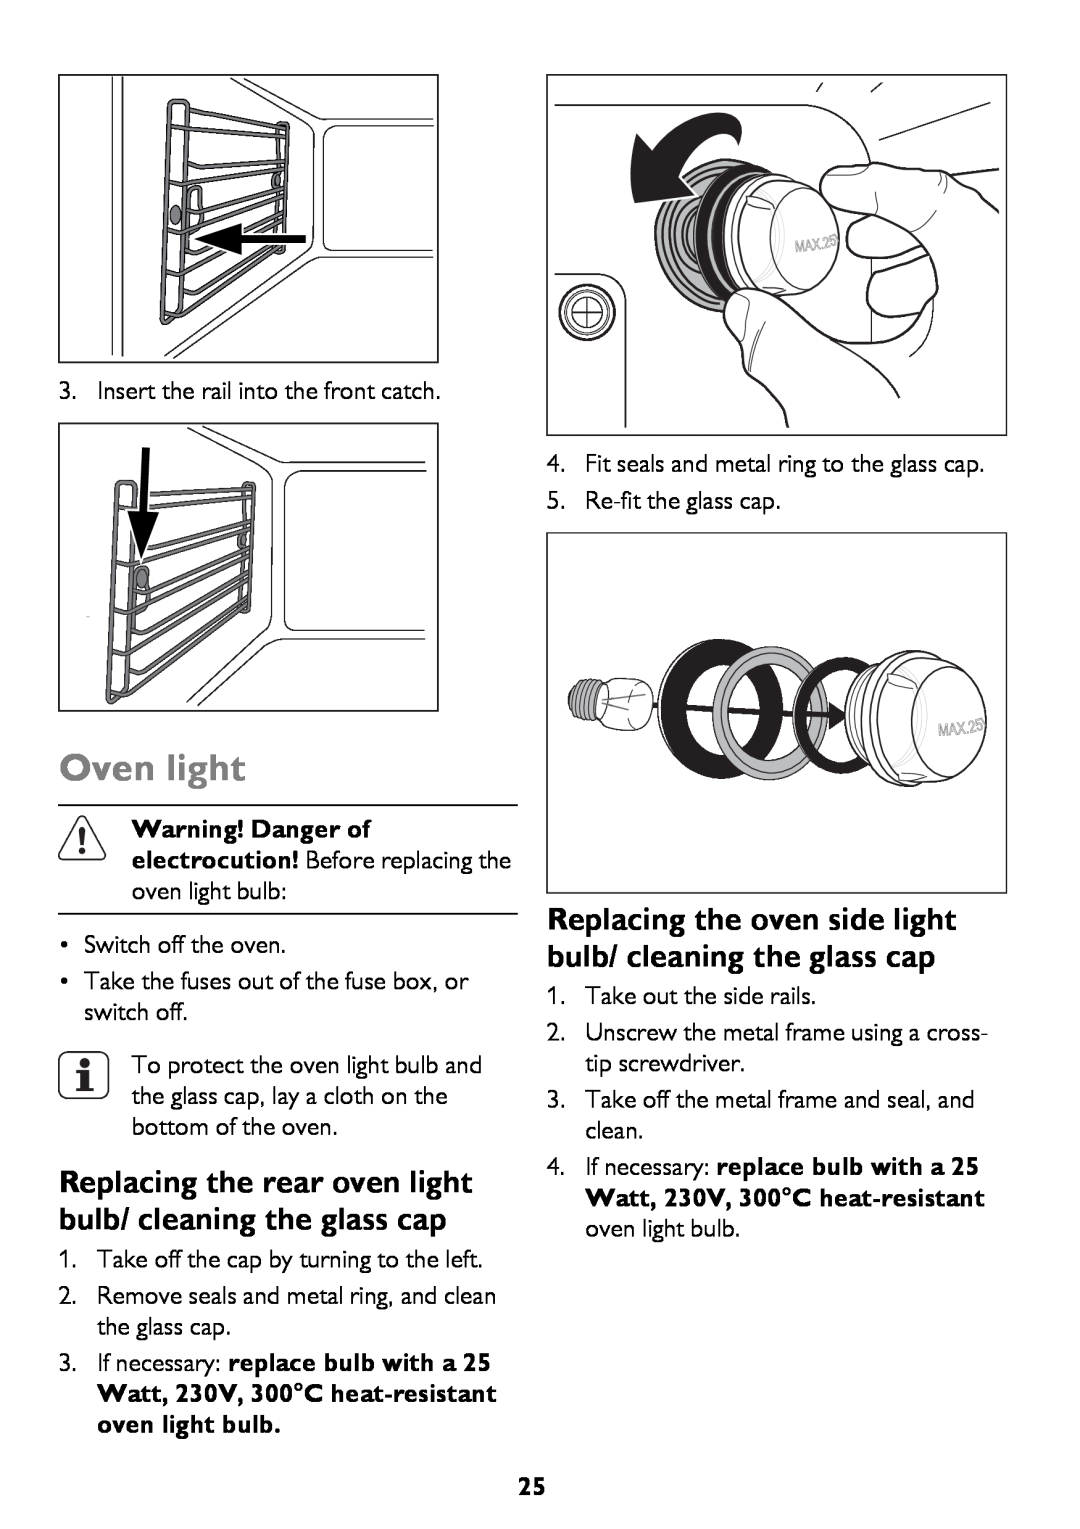 John Lewis JLBIOS610 Oven light, If necessary: replace bulb with a, Watt, 230V, 300C heat-resistantoven light bulb 